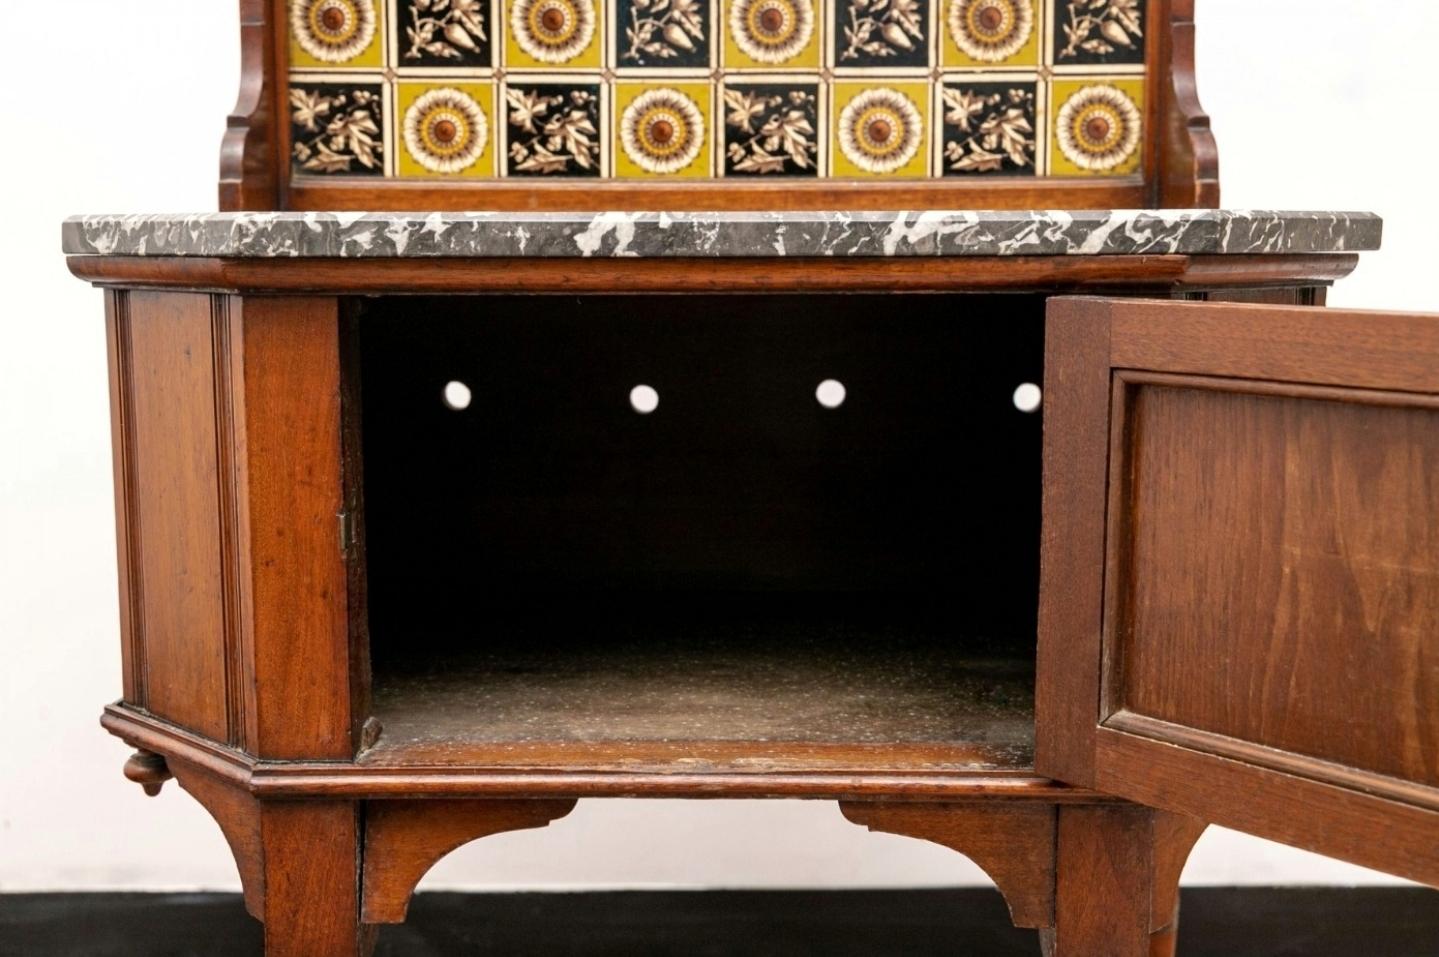 19th Century Victorian Eastlake Walnut Washstand With Ceramic Tiled Backsplash  5